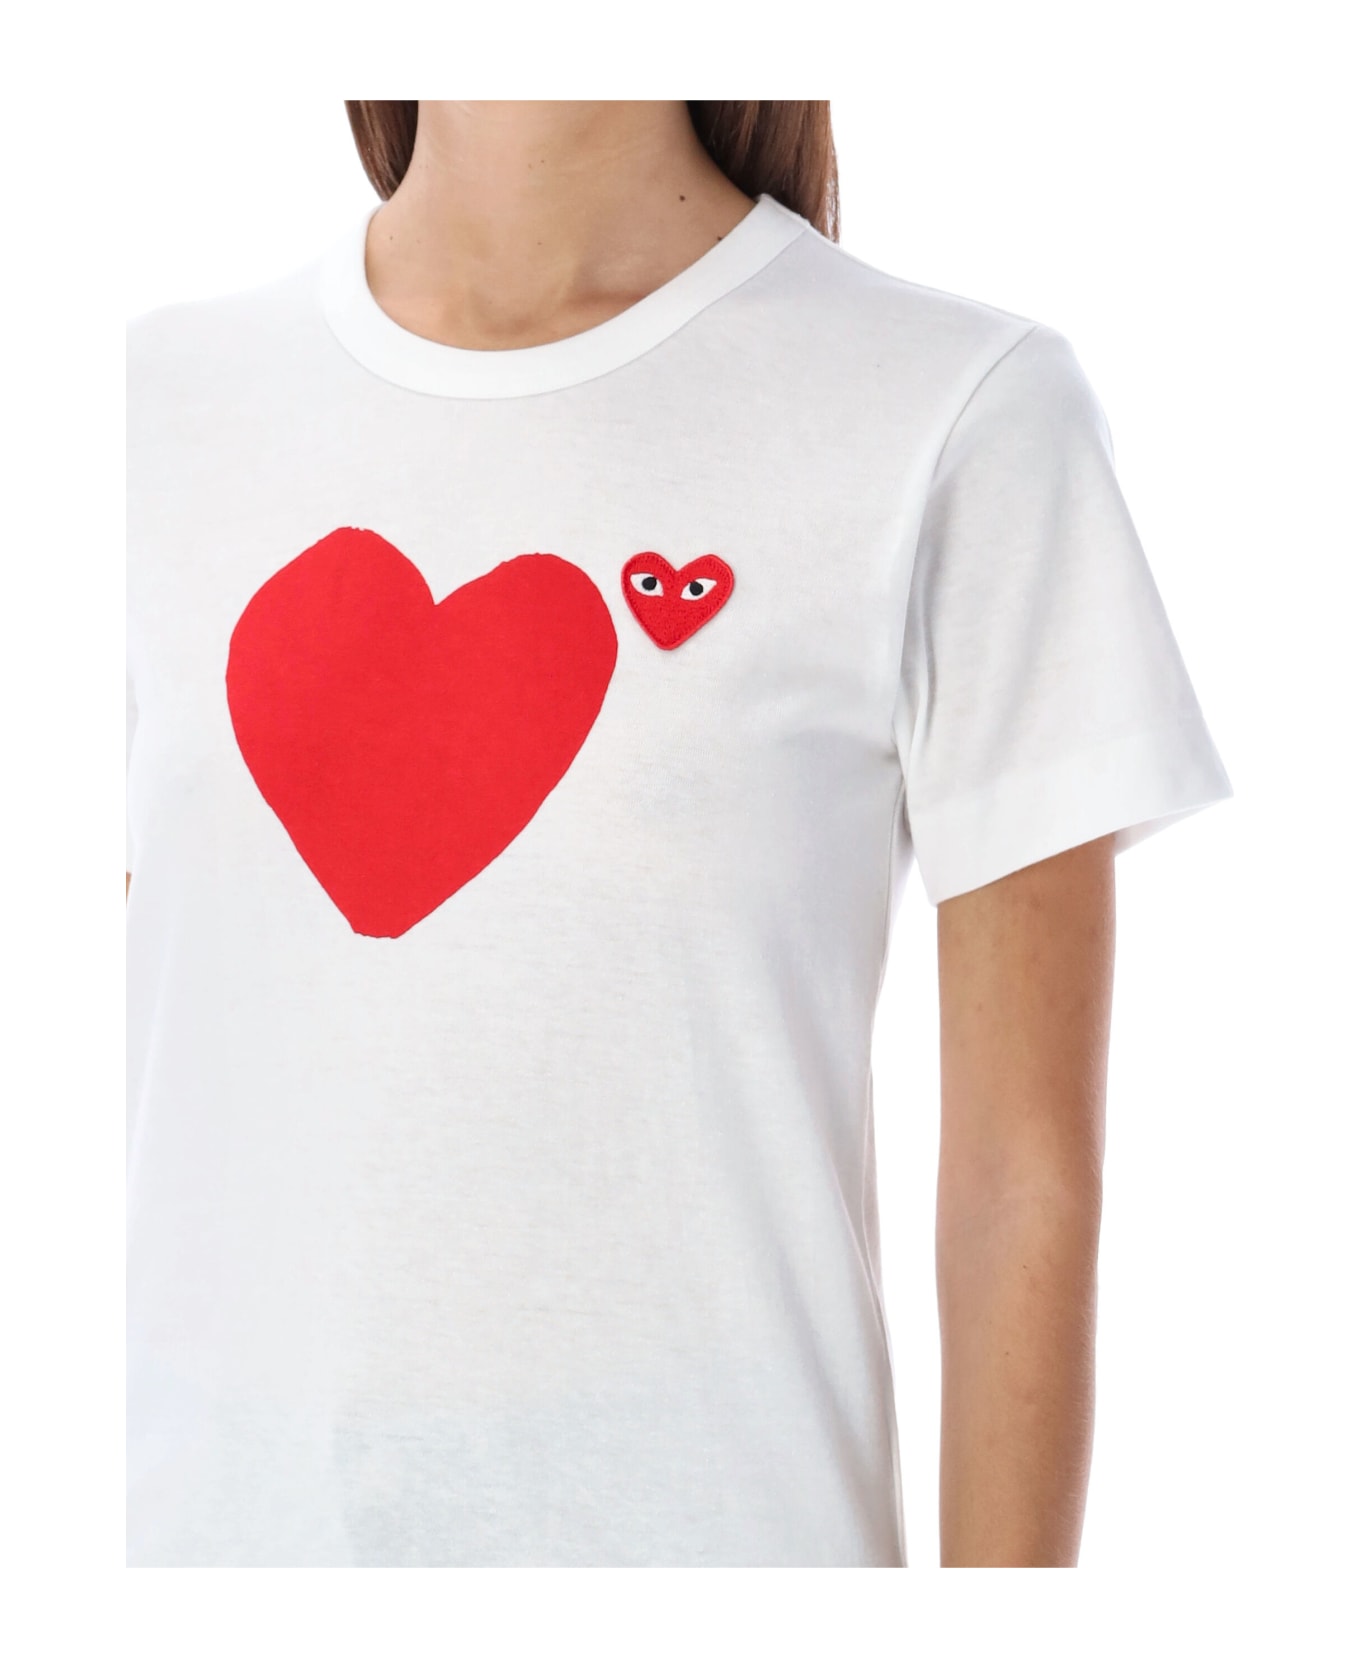 Comme des Garçons Play Big Red Heart T-shirt - WHITE RED